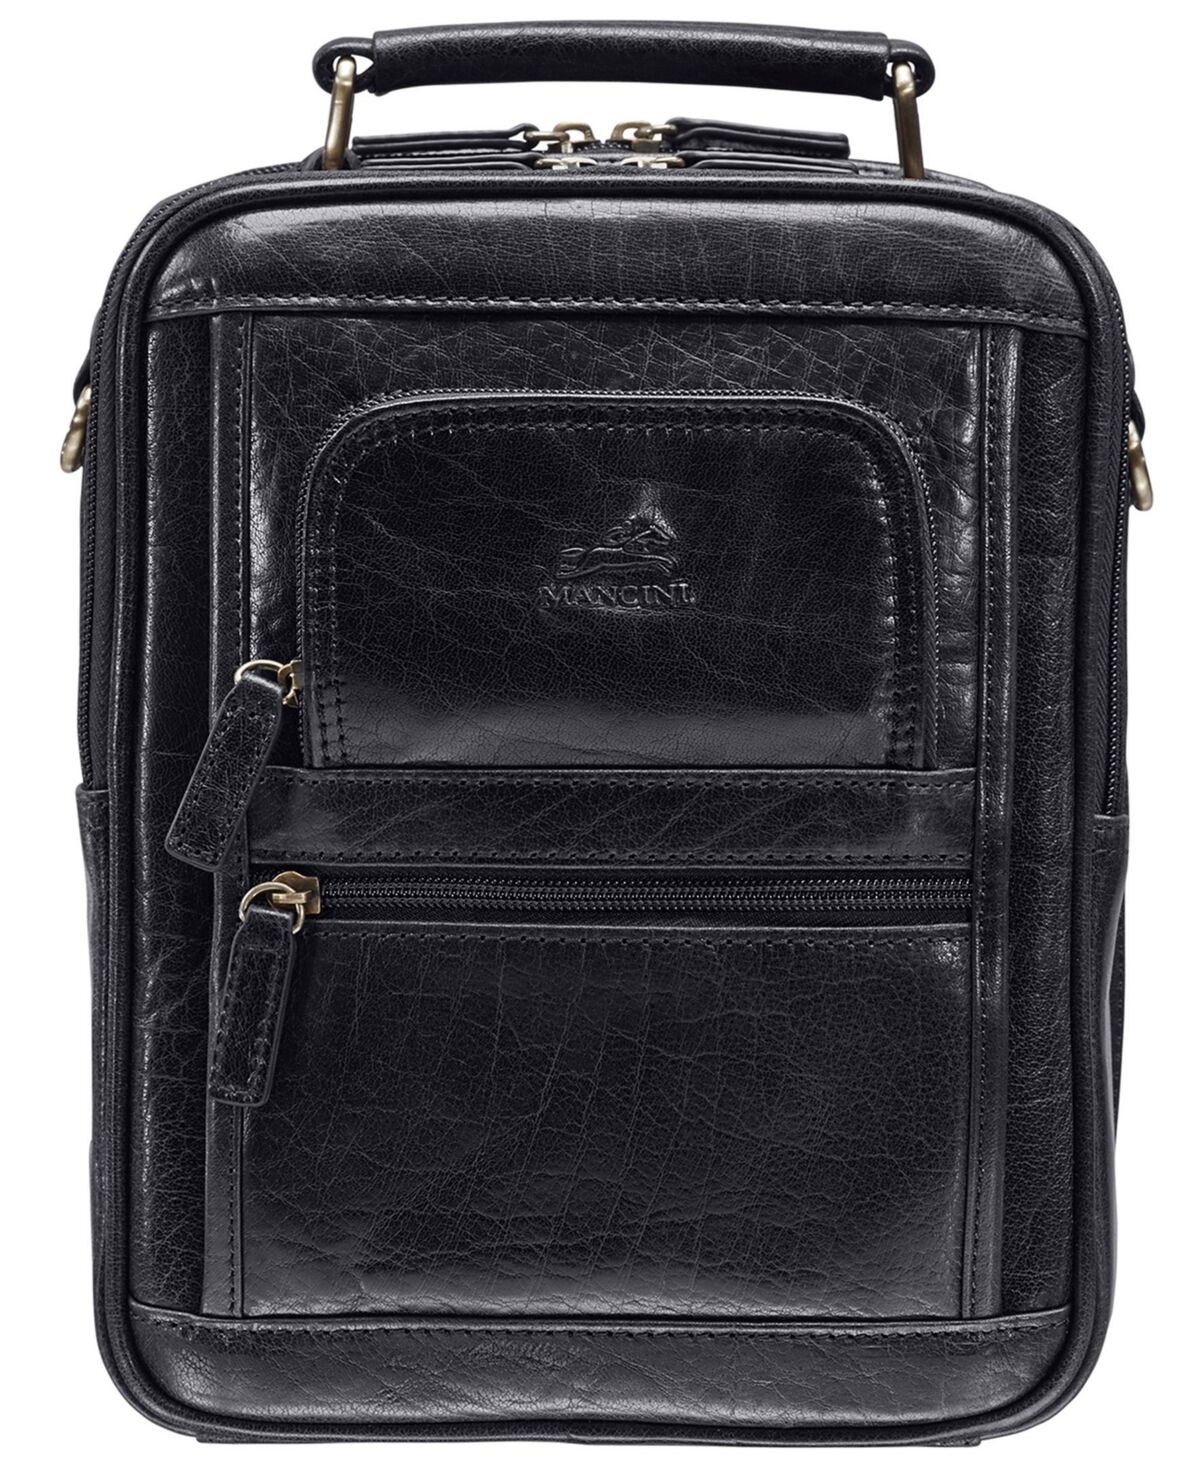 Mancini Arizona Collection Large Unisex Bag with Rear Zippered Organizer - Black